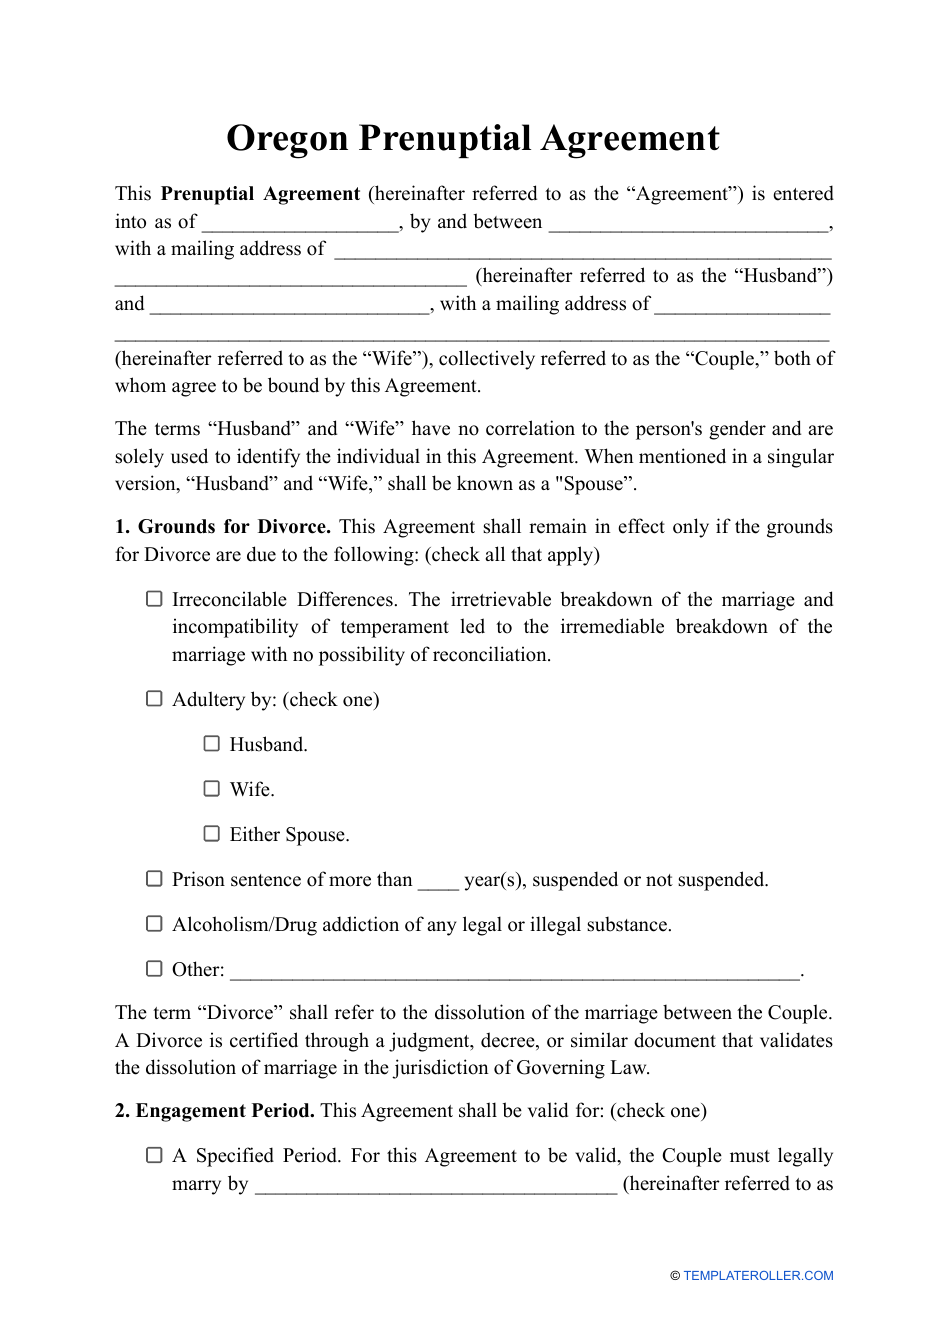 Prenuptial Agreement Template - Oregon, Page 1